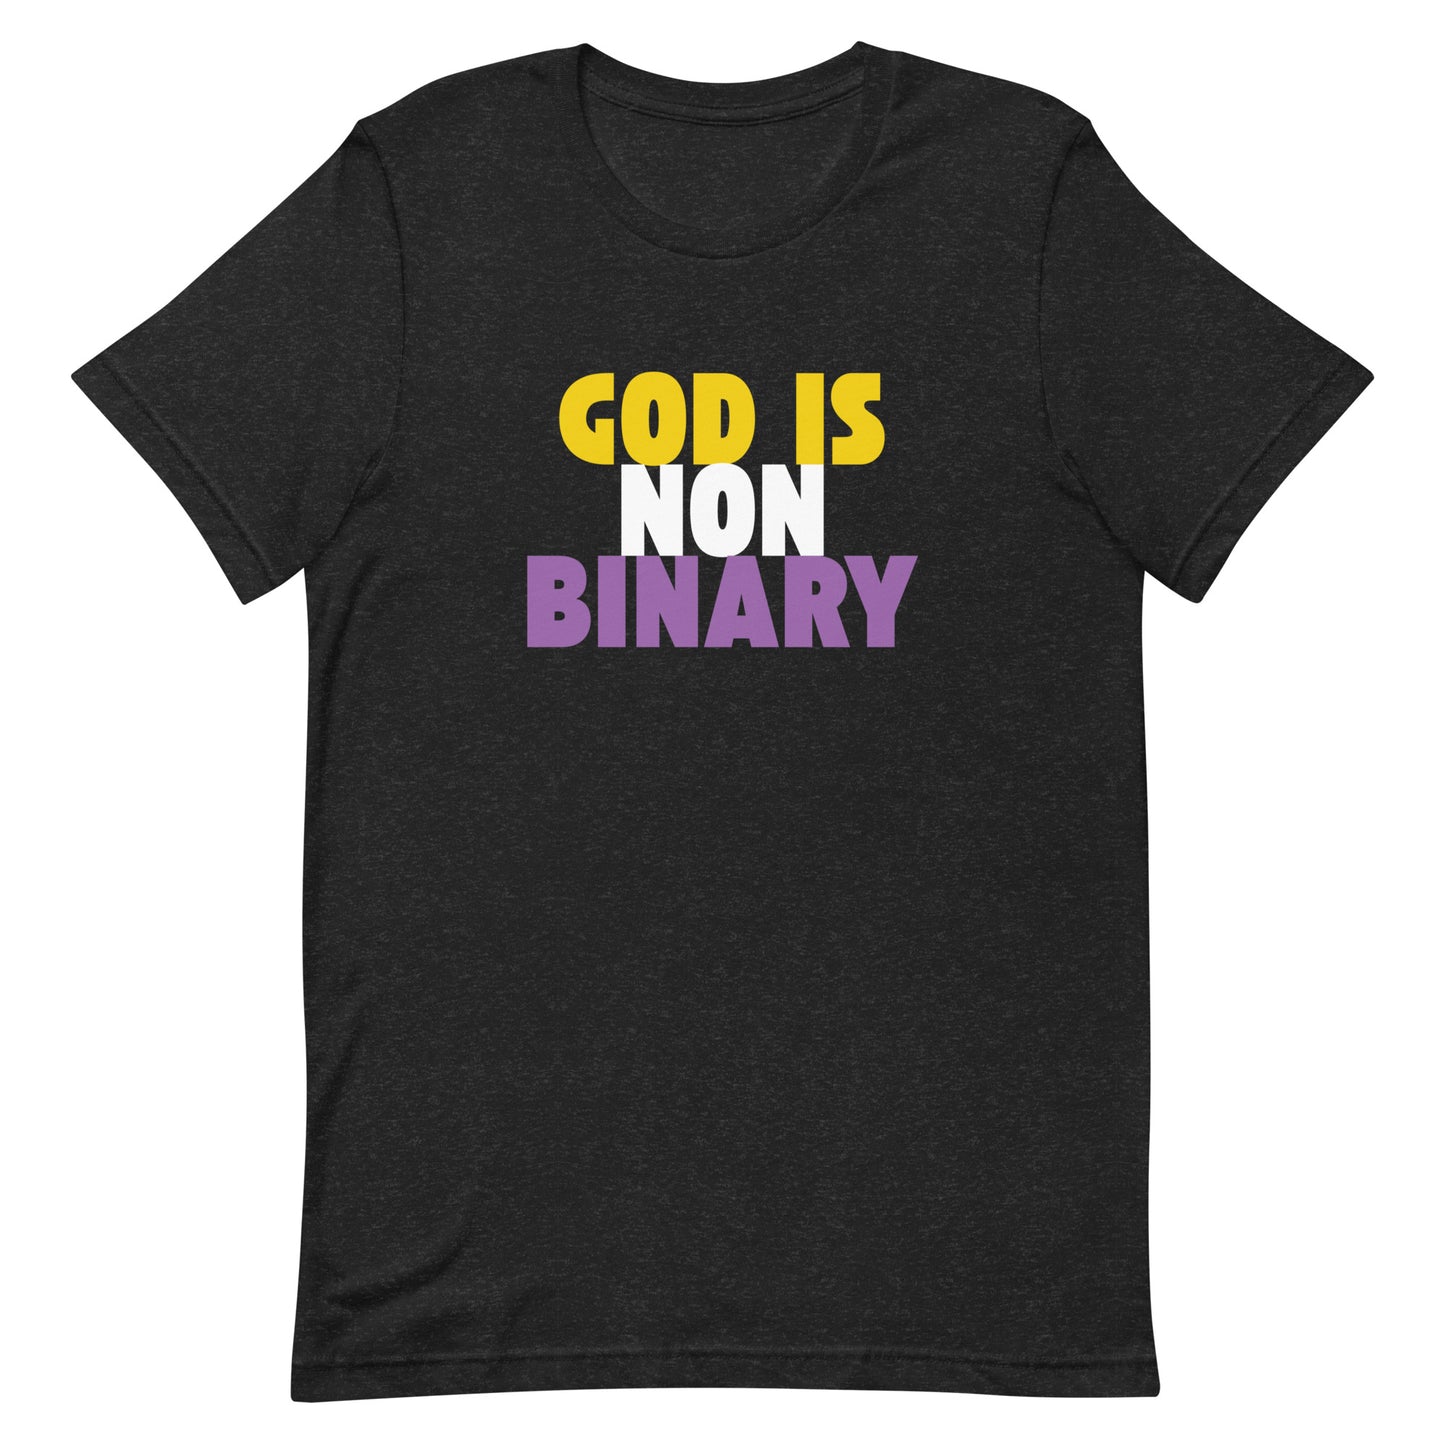 God is Nonbinary - Men’s/Unisex Tee